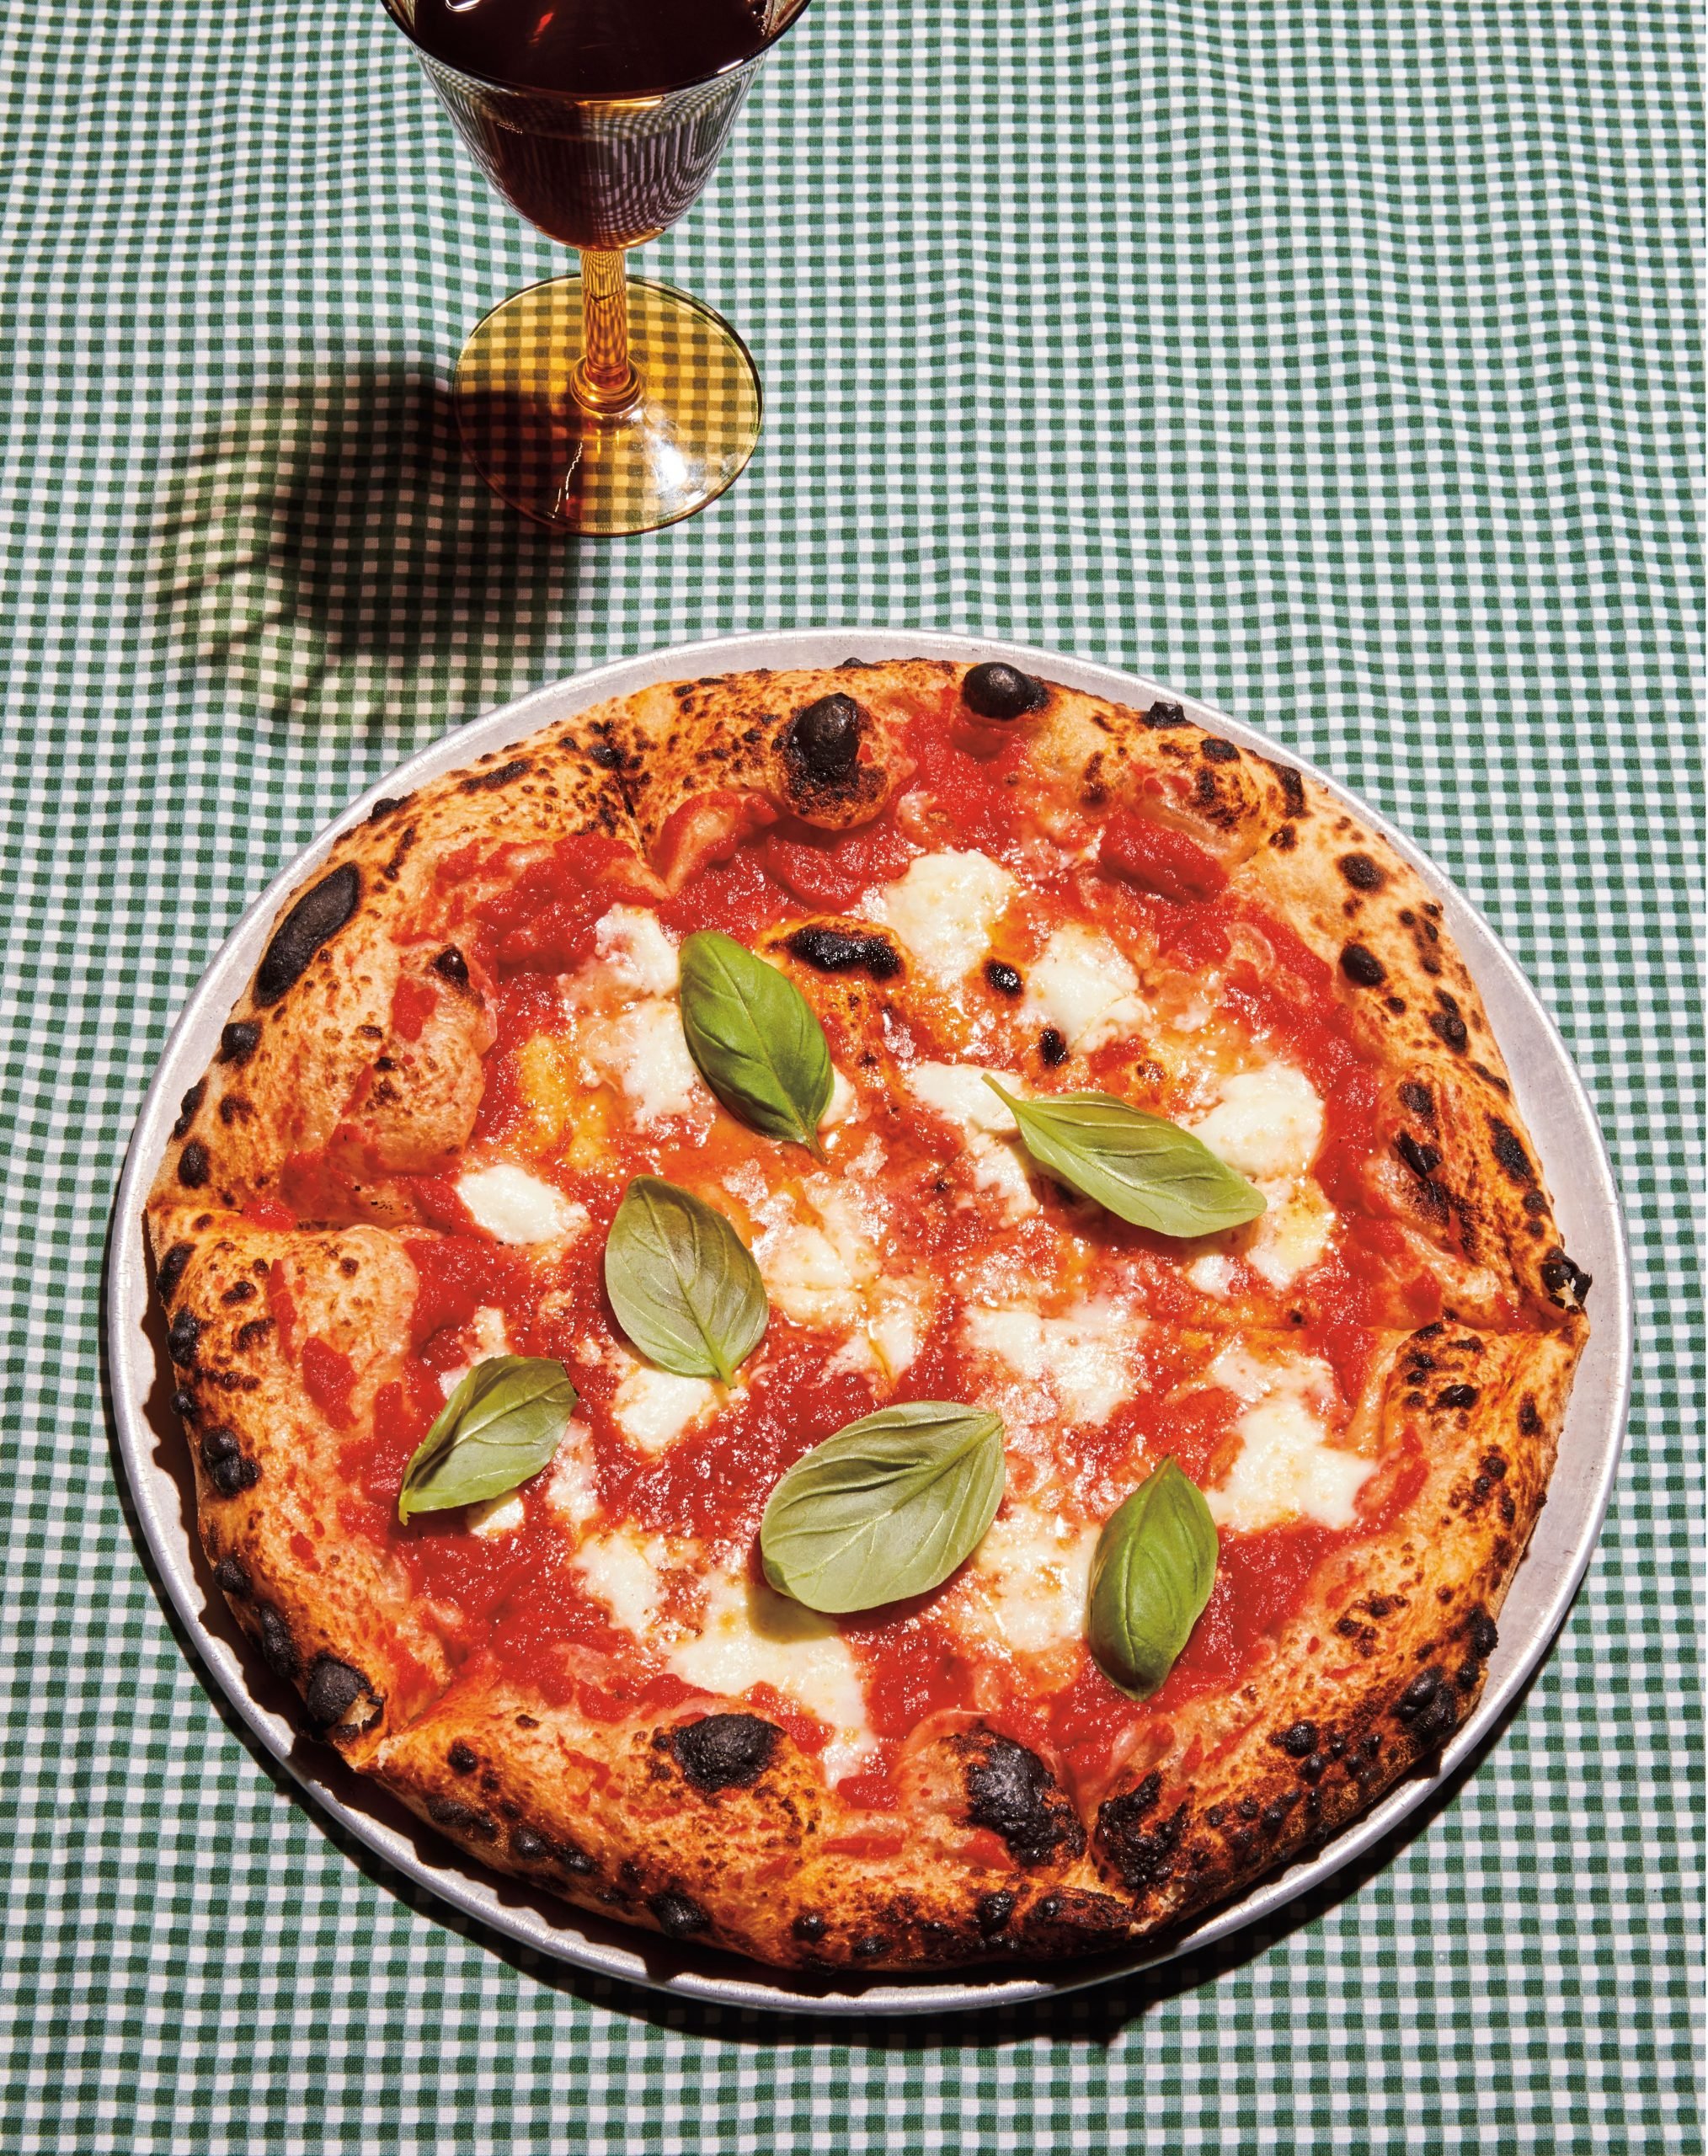 Pizza Margherita completa sobre un mantel de cuadros verdes.